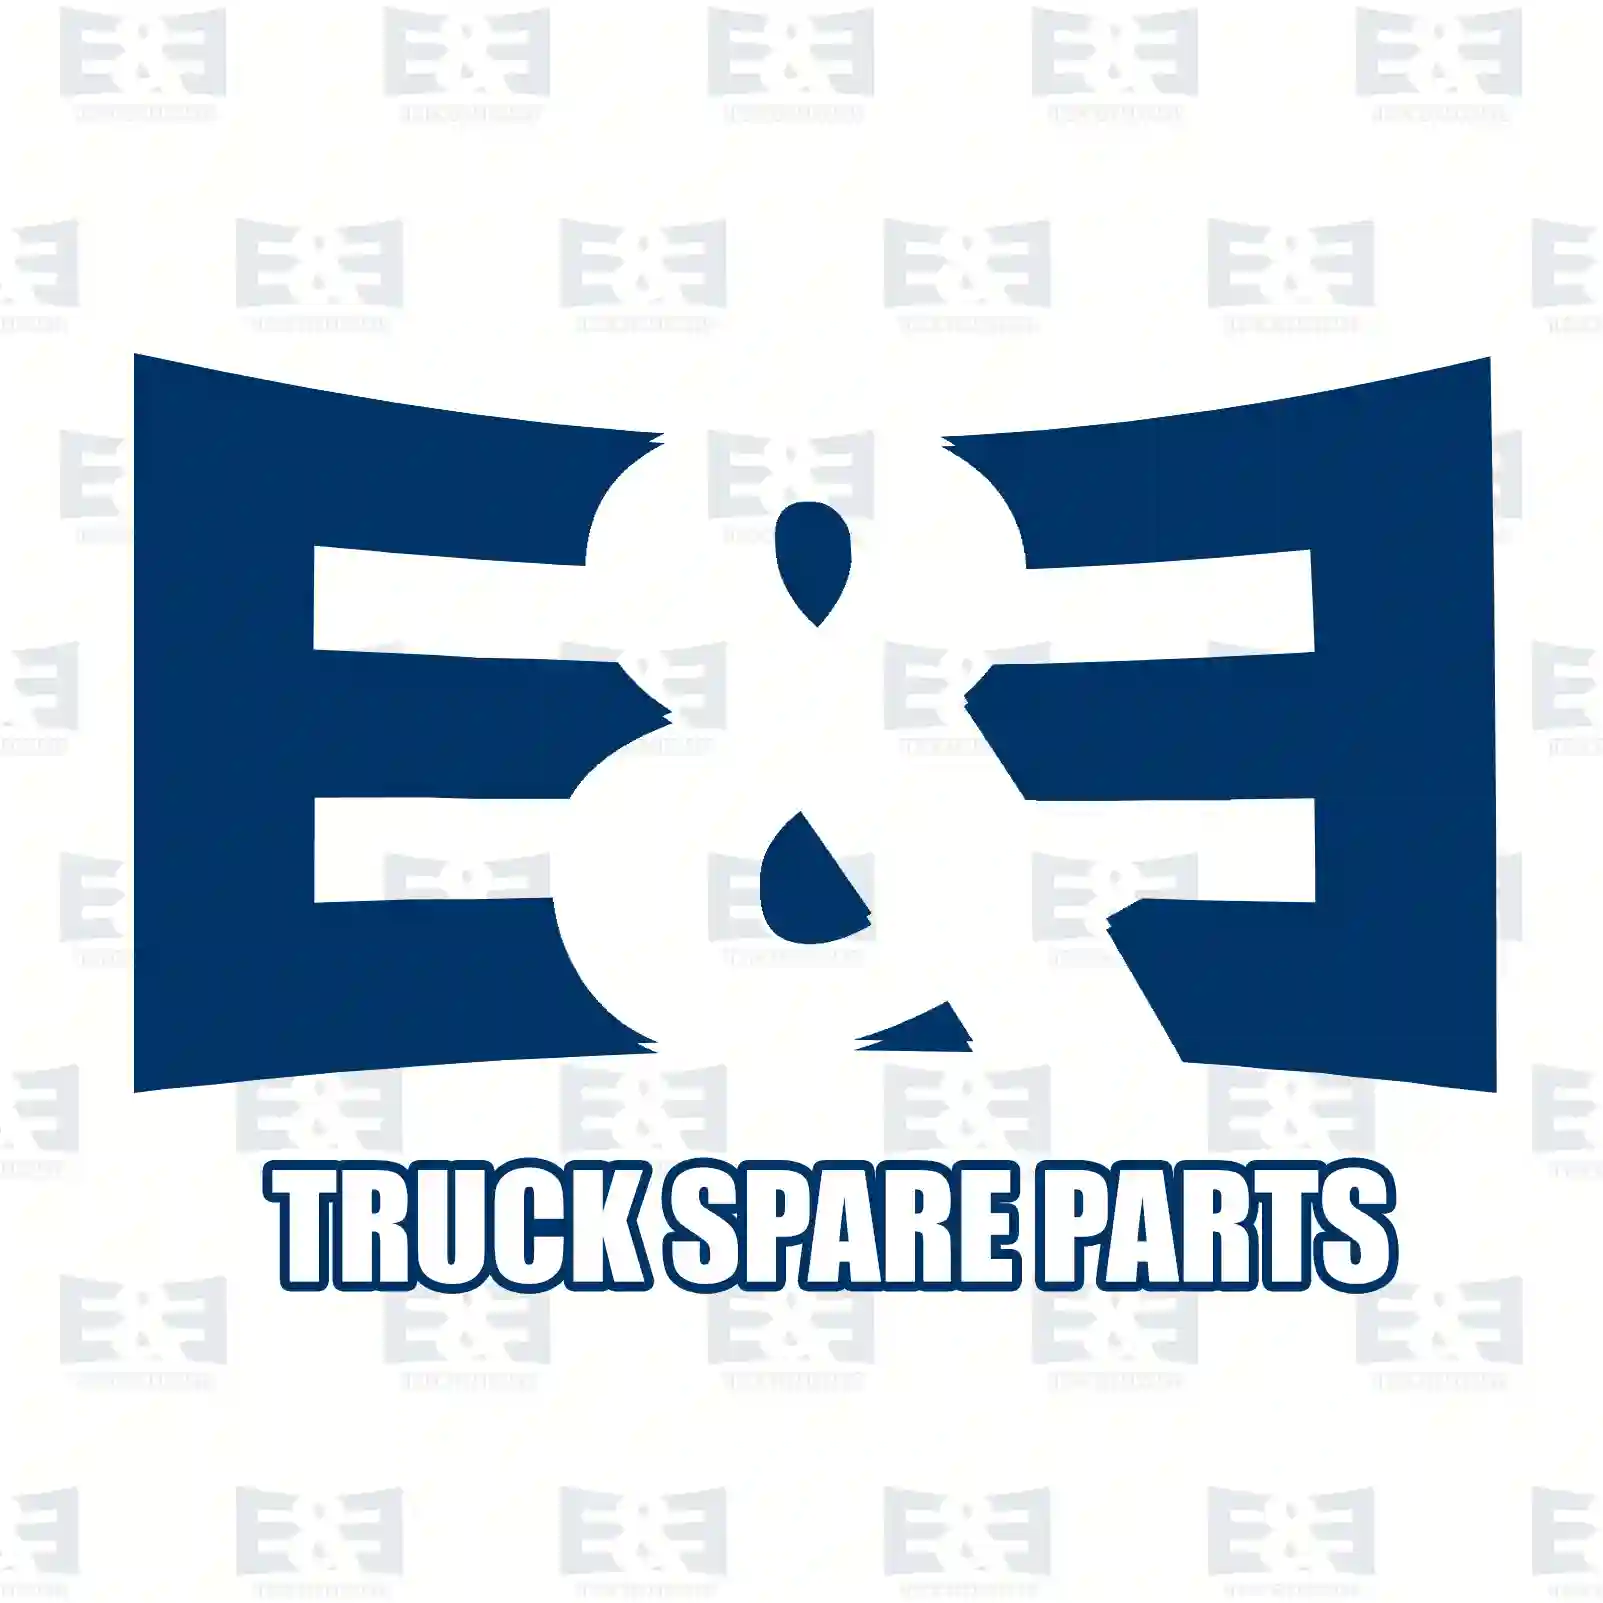  Clutch Kit (Cover & Disc) Clutch cover, EE No 2E2289255 ,  oem no:1521730, 1655738, 1655752, 1667257, 1668536, 1668616, 5003214, 5003215, 5003414, 5003472, 5009414, 79904, 8112221 E&E Truck Spare Parts | Truck Spare Parts, Auotomotive Spare Parts